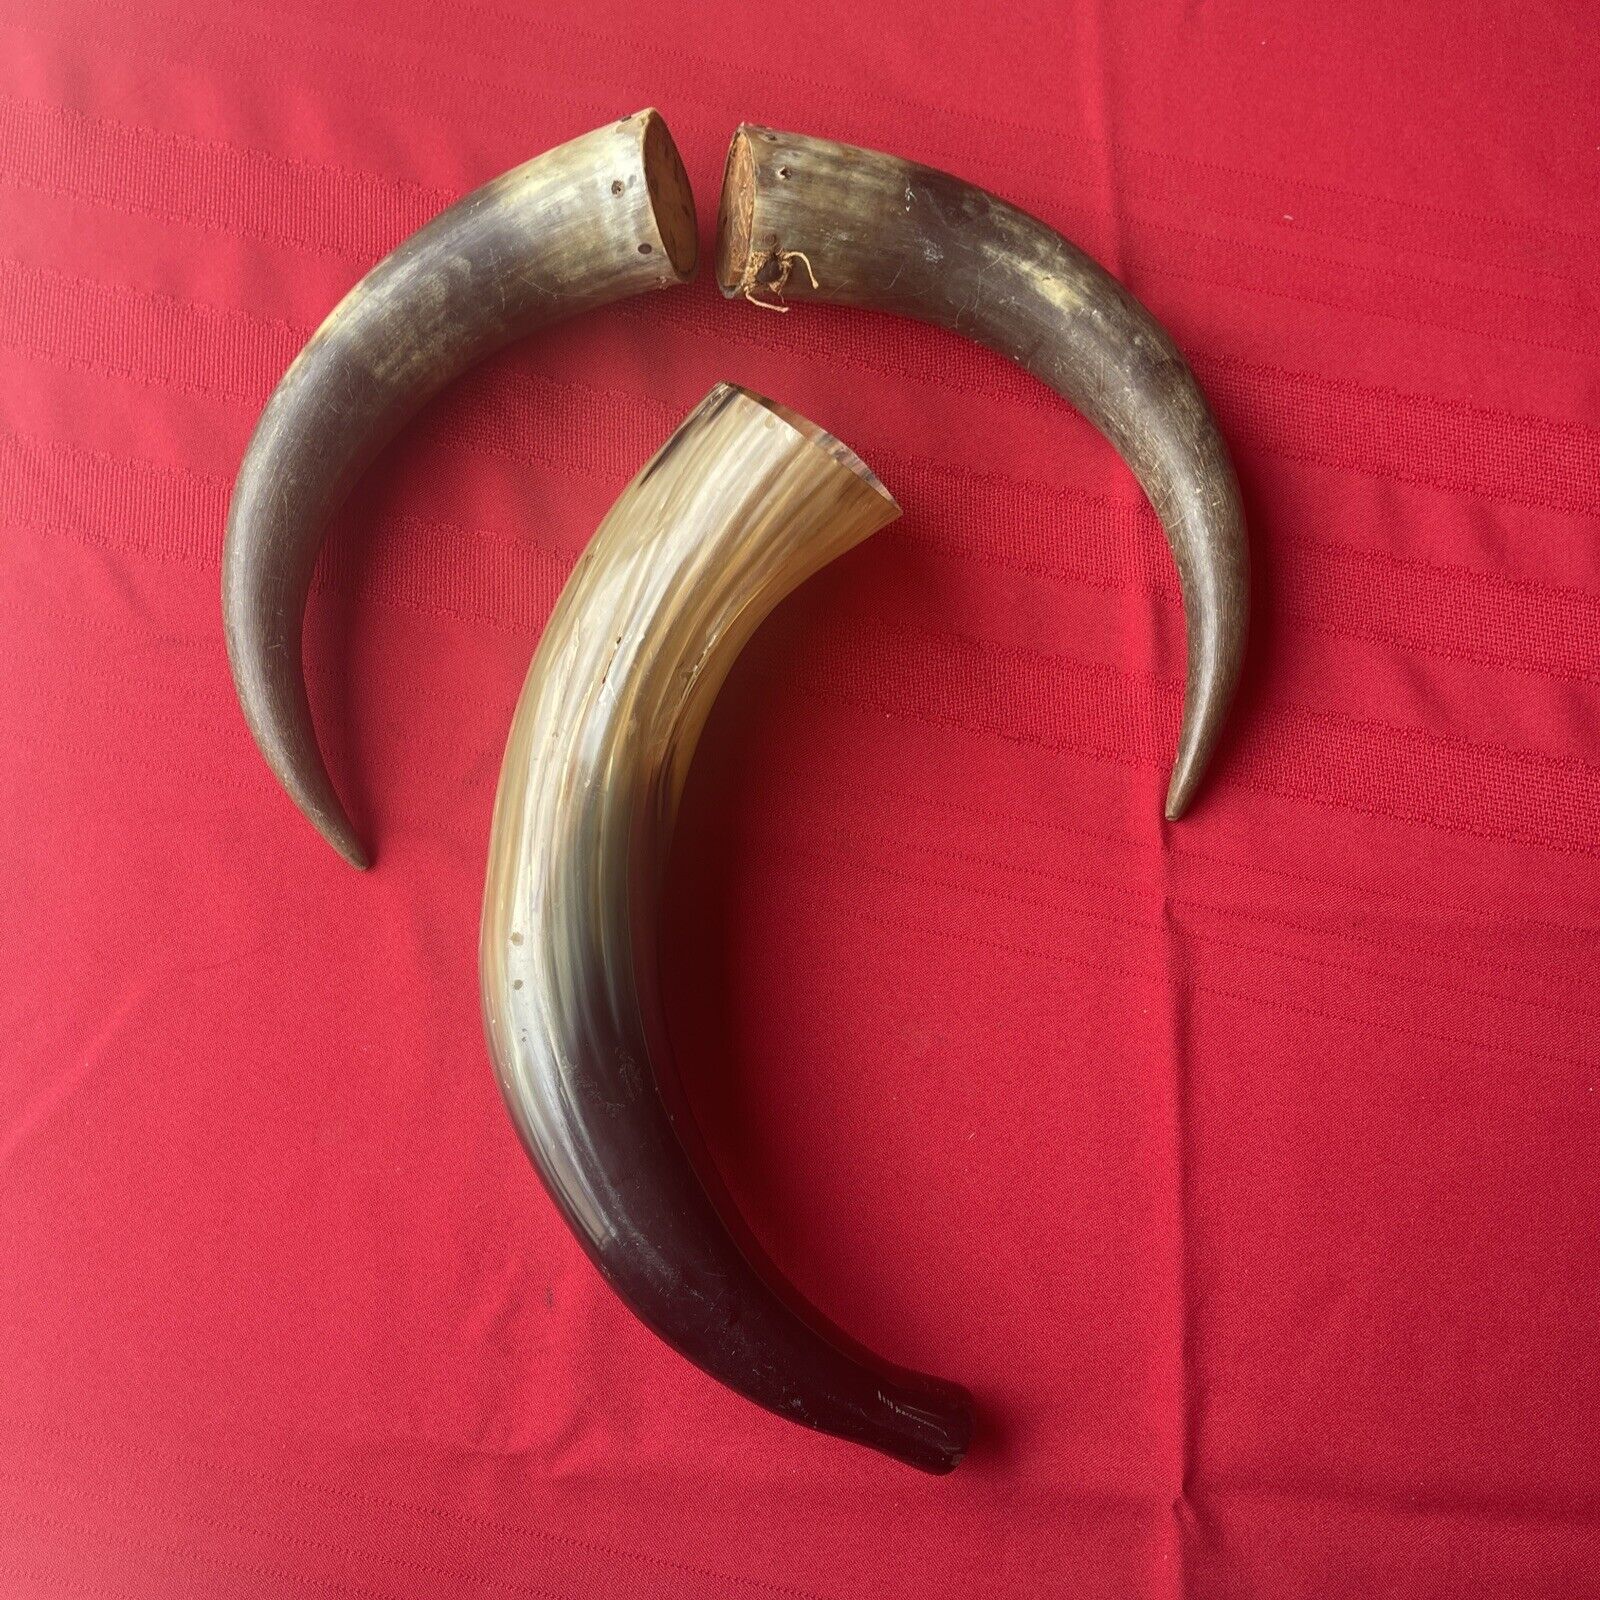 Three Large Vintage Horns -possible Powder horns?